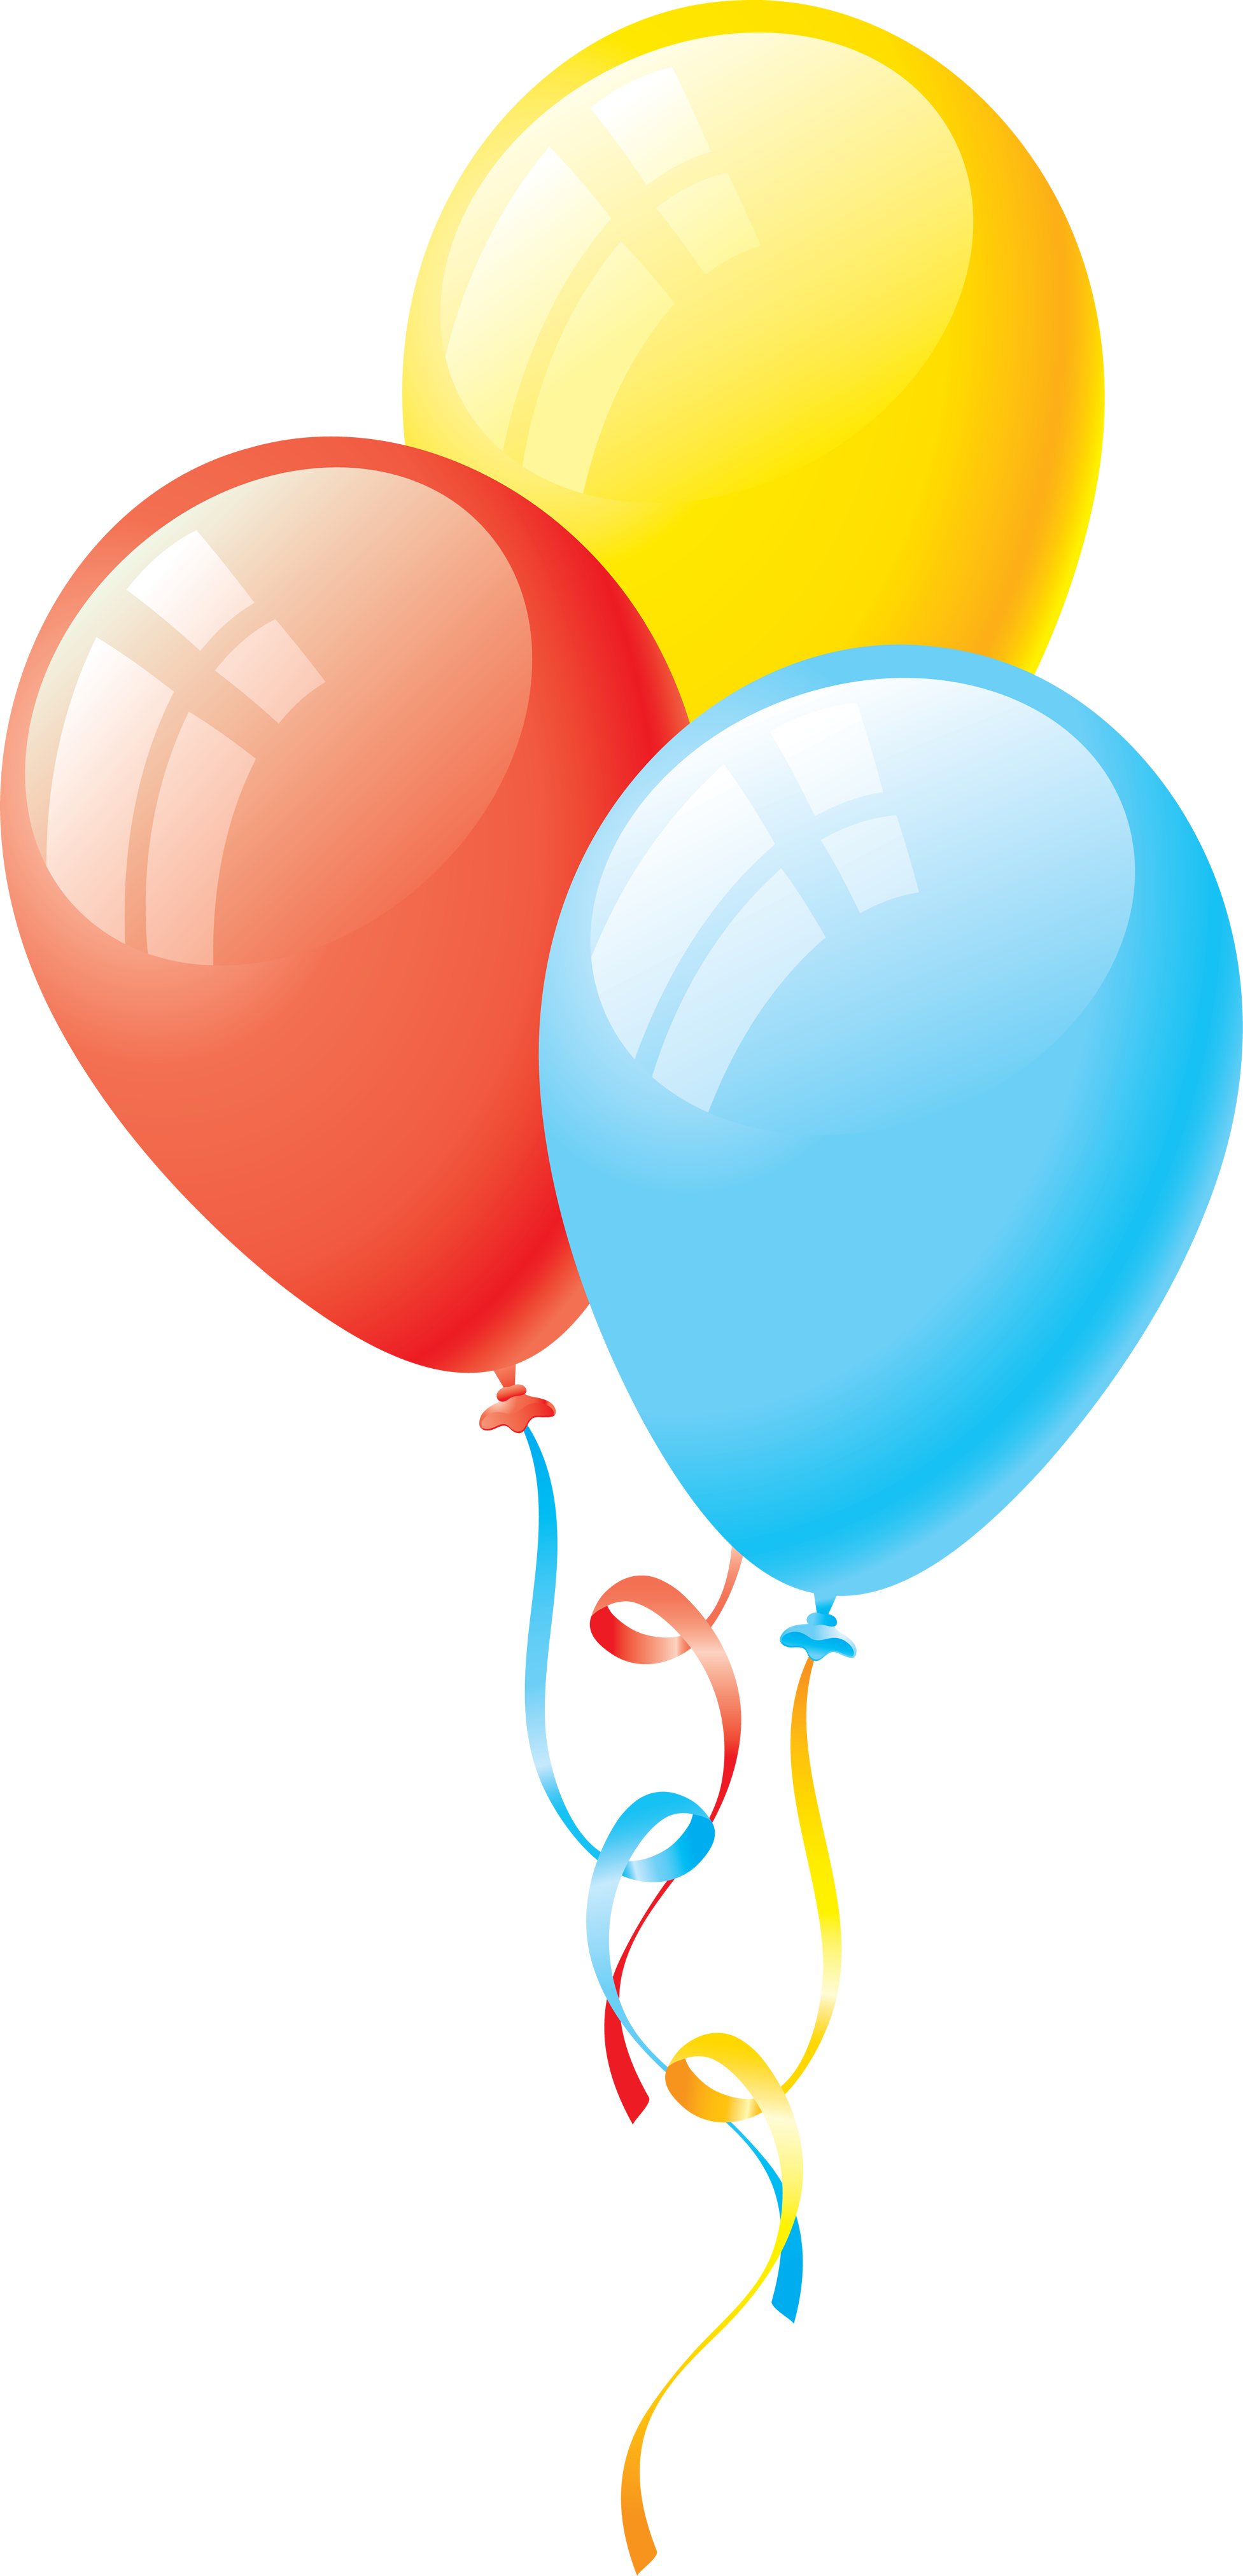 Celebrative Birthday Balloons PNG Image